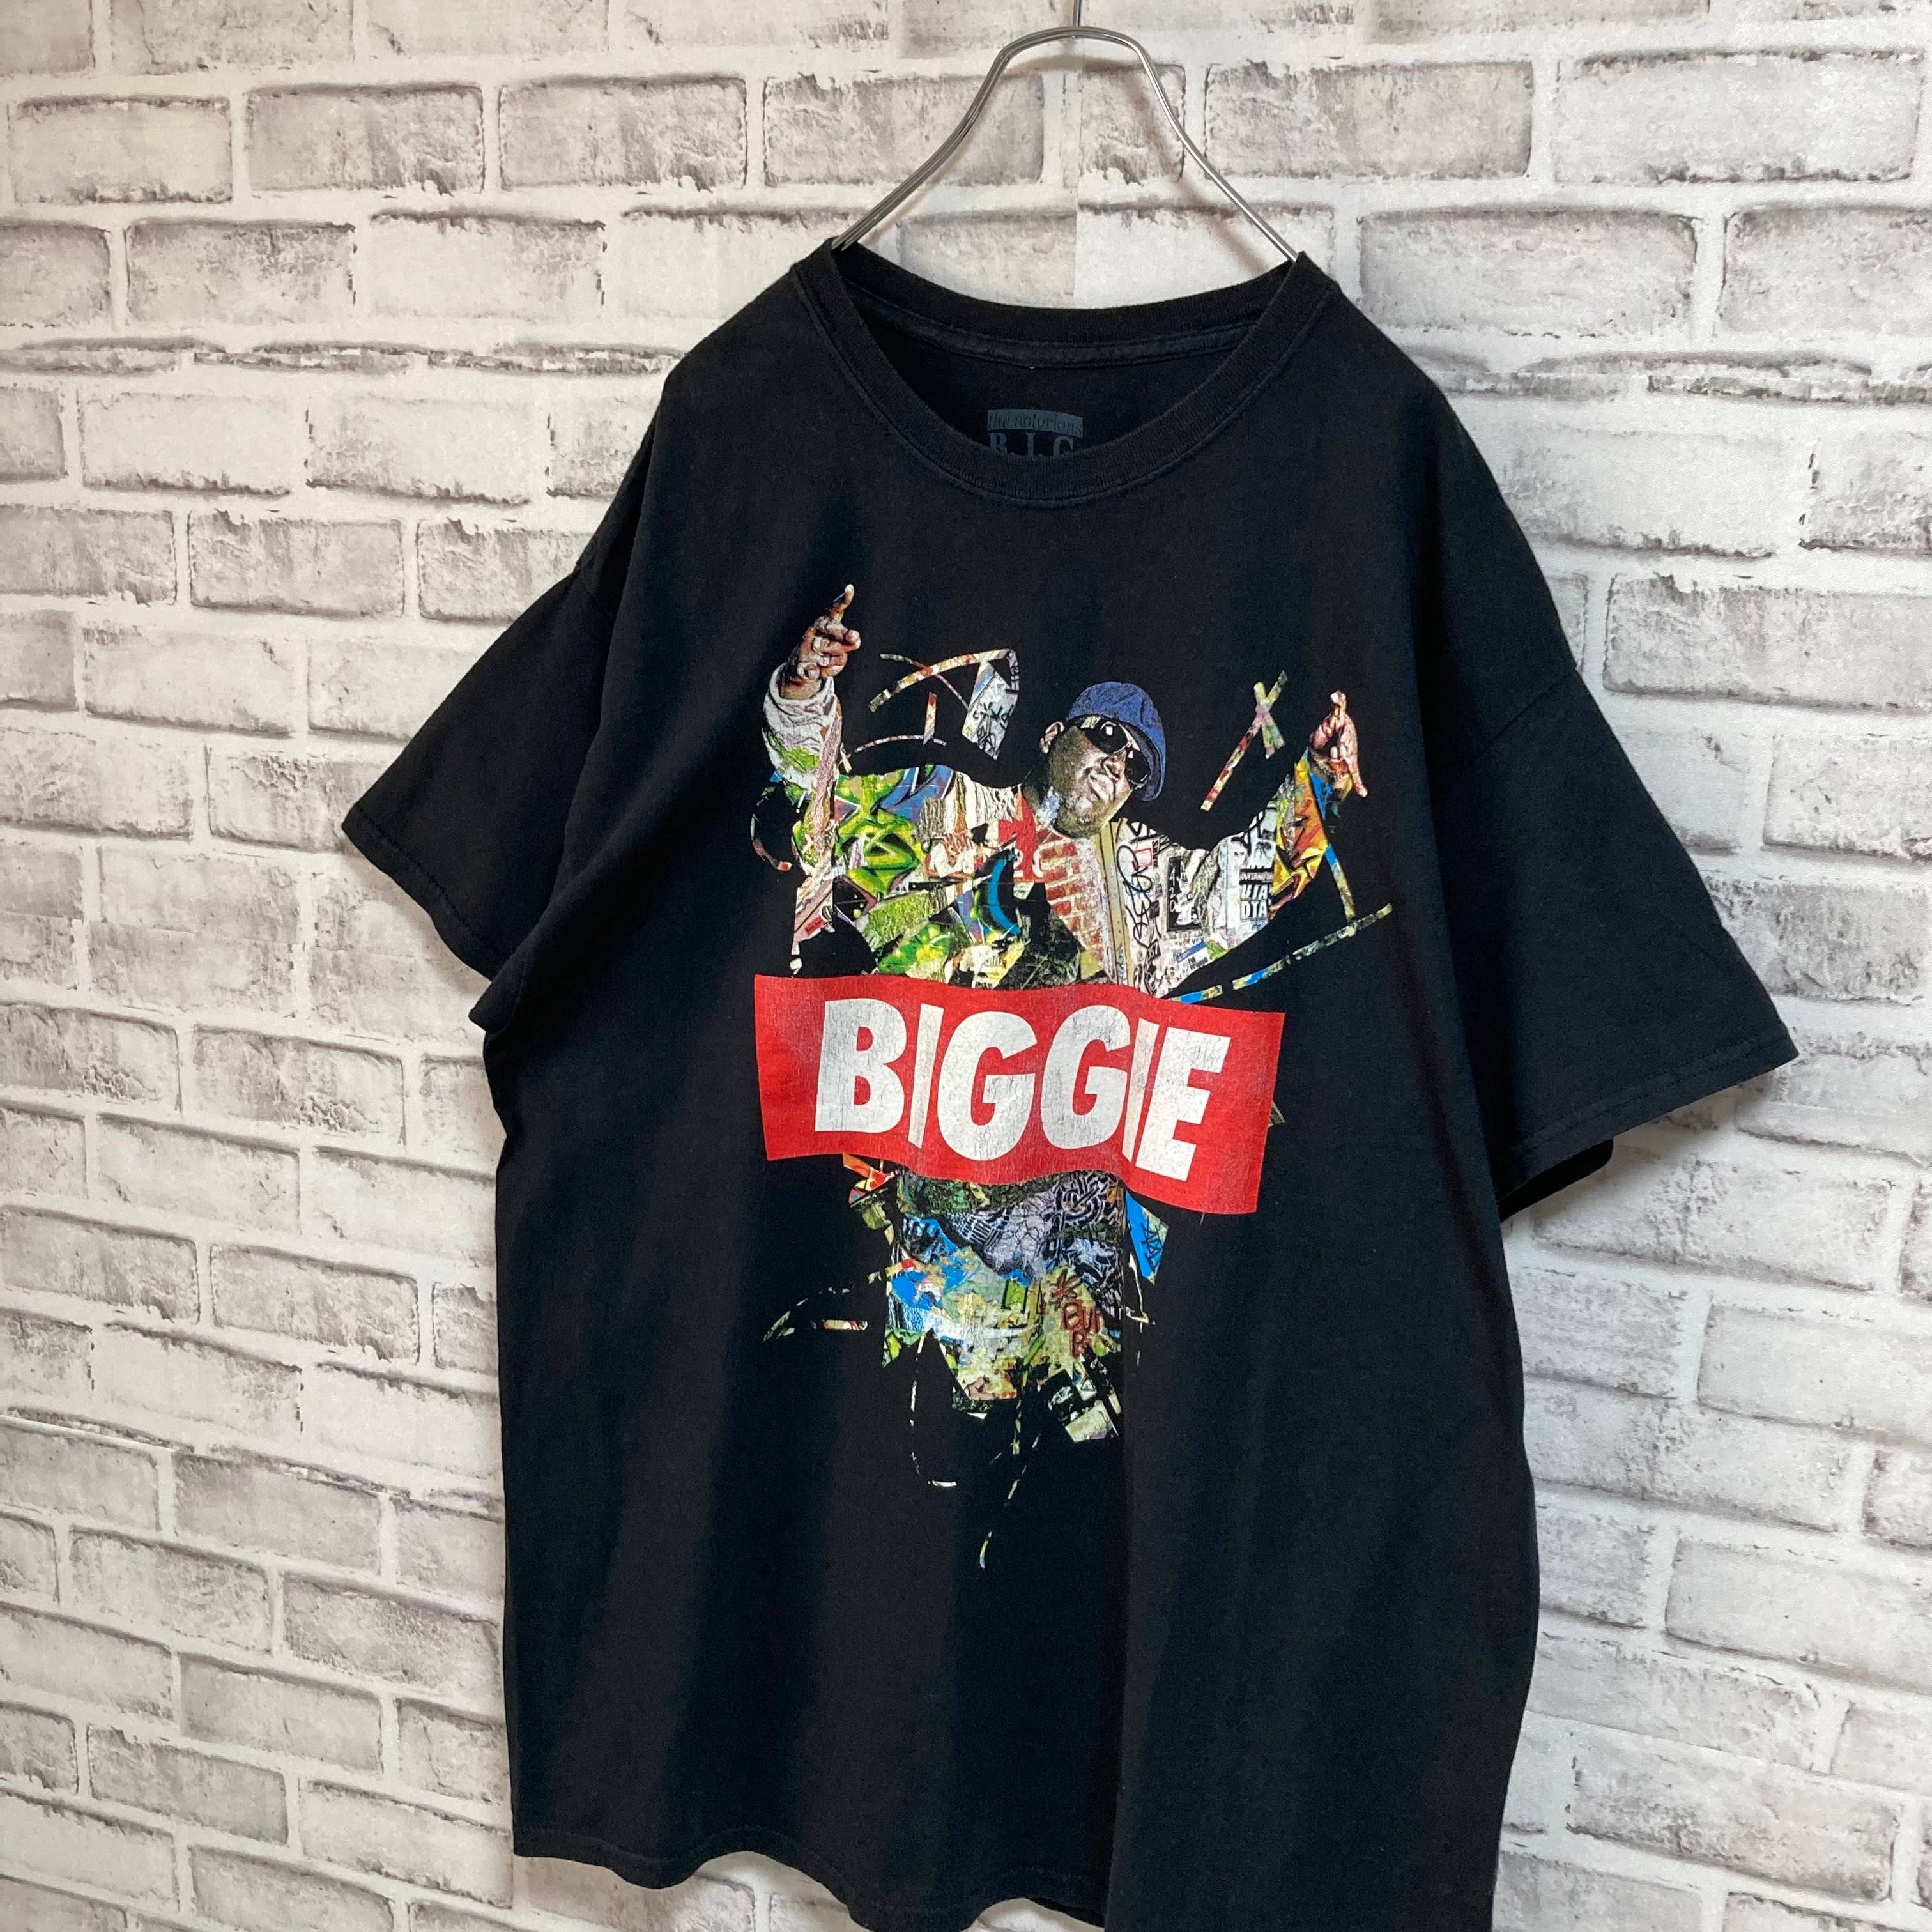 【notorious B.I.G】S/S Tee XL “BIGGIE” アーティストTシャツ ビギー ラップTee ラッパー HIPHOP  coogi Tシャツ アメリカ USA 古着